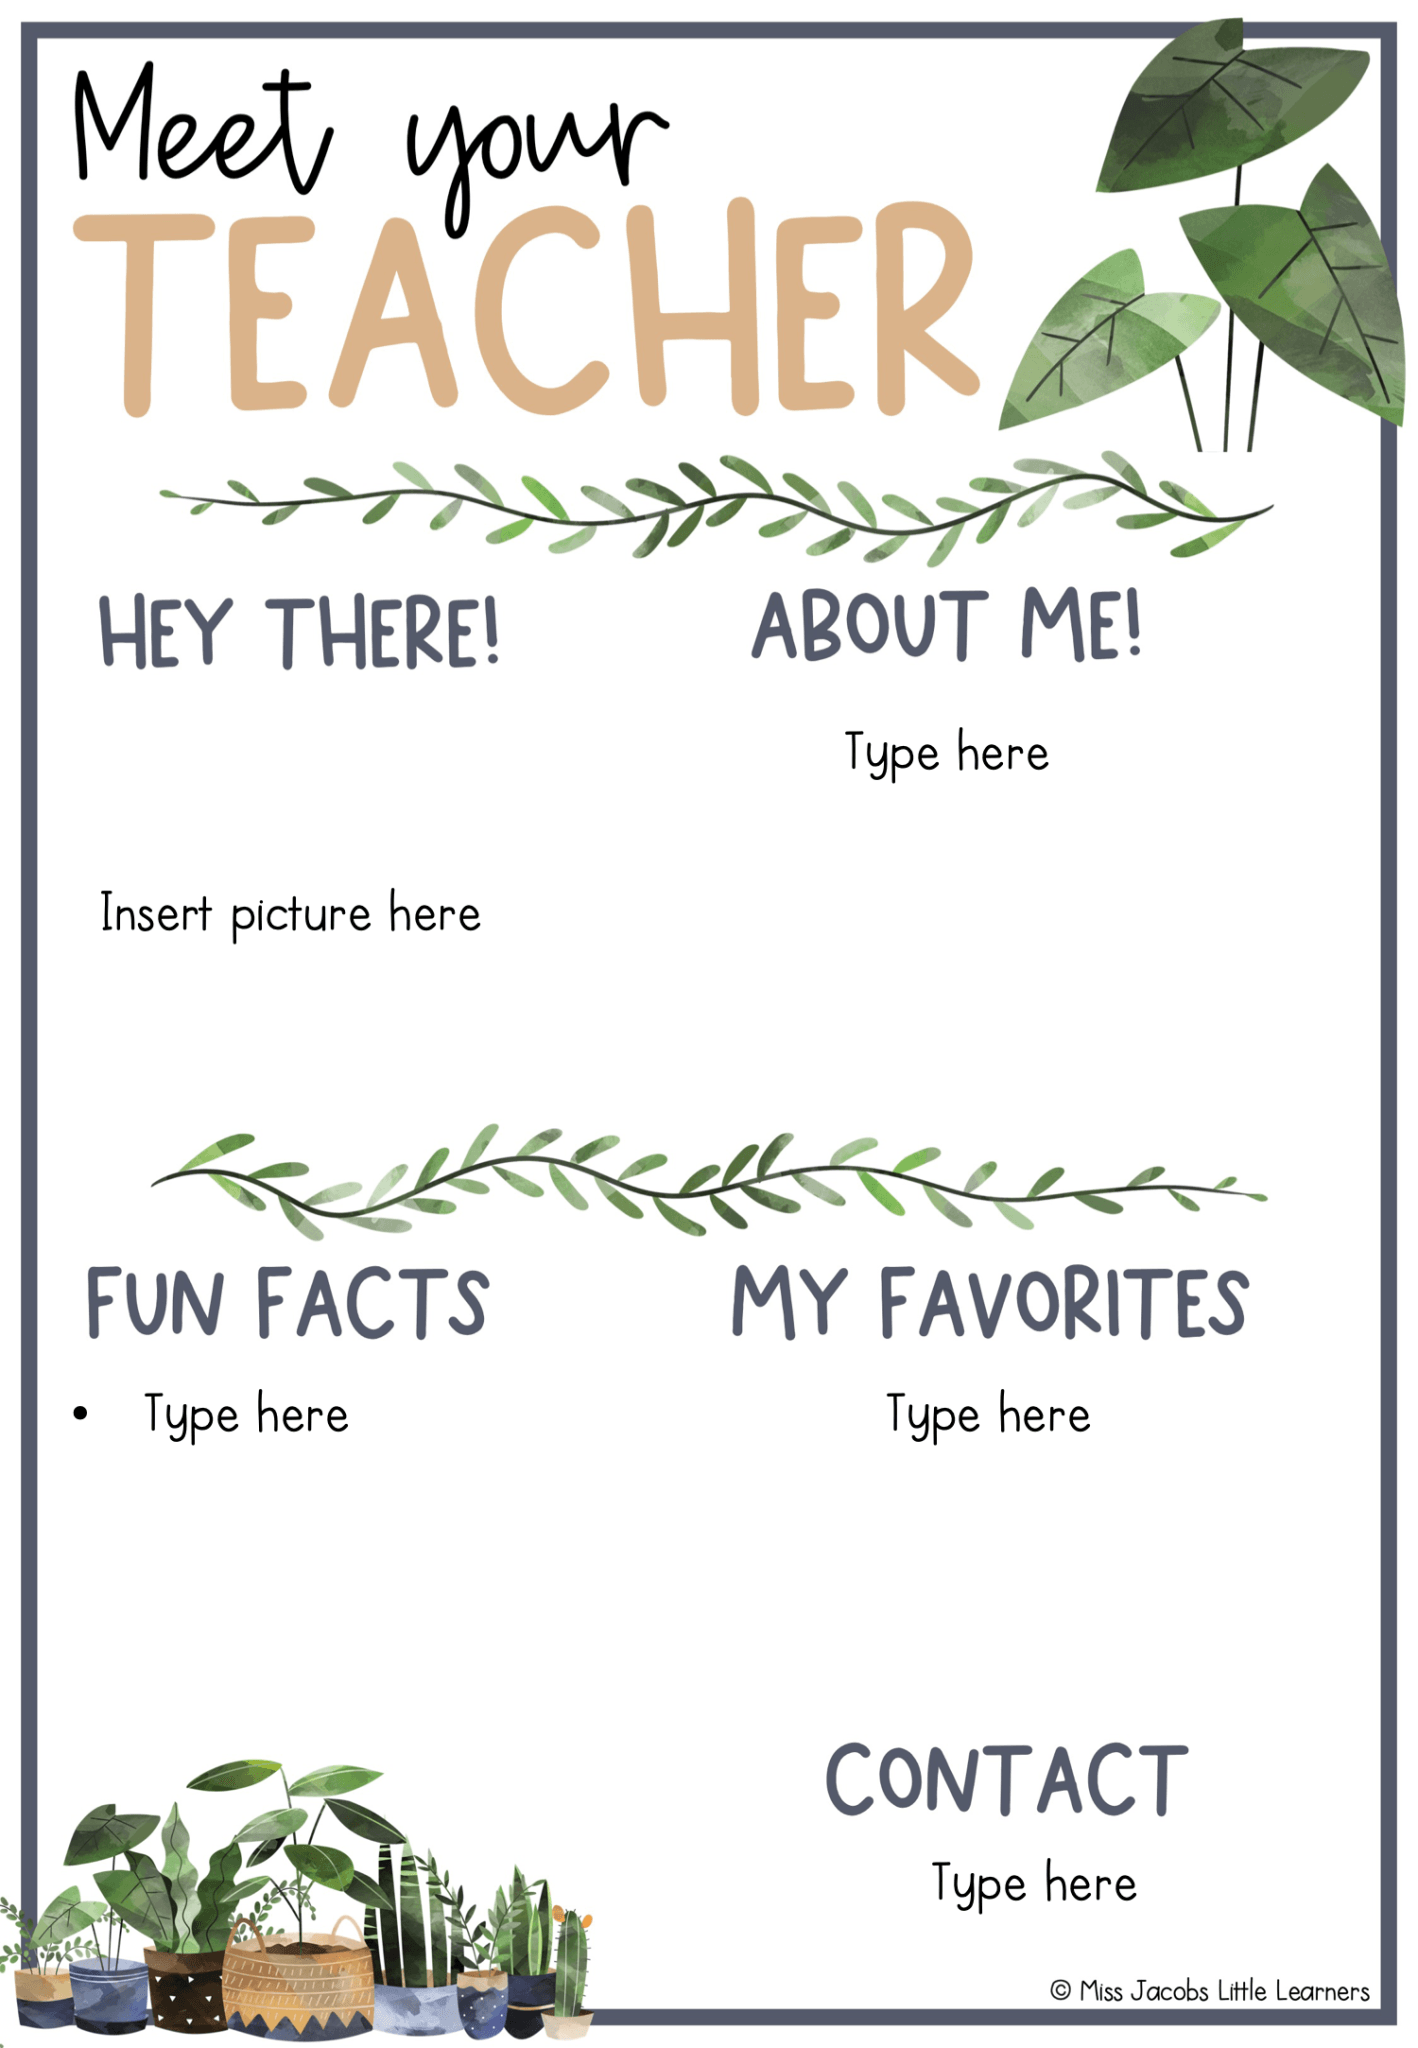 meet-the-teacher-template-miss-jacobs-little-learners-miss-jacobs